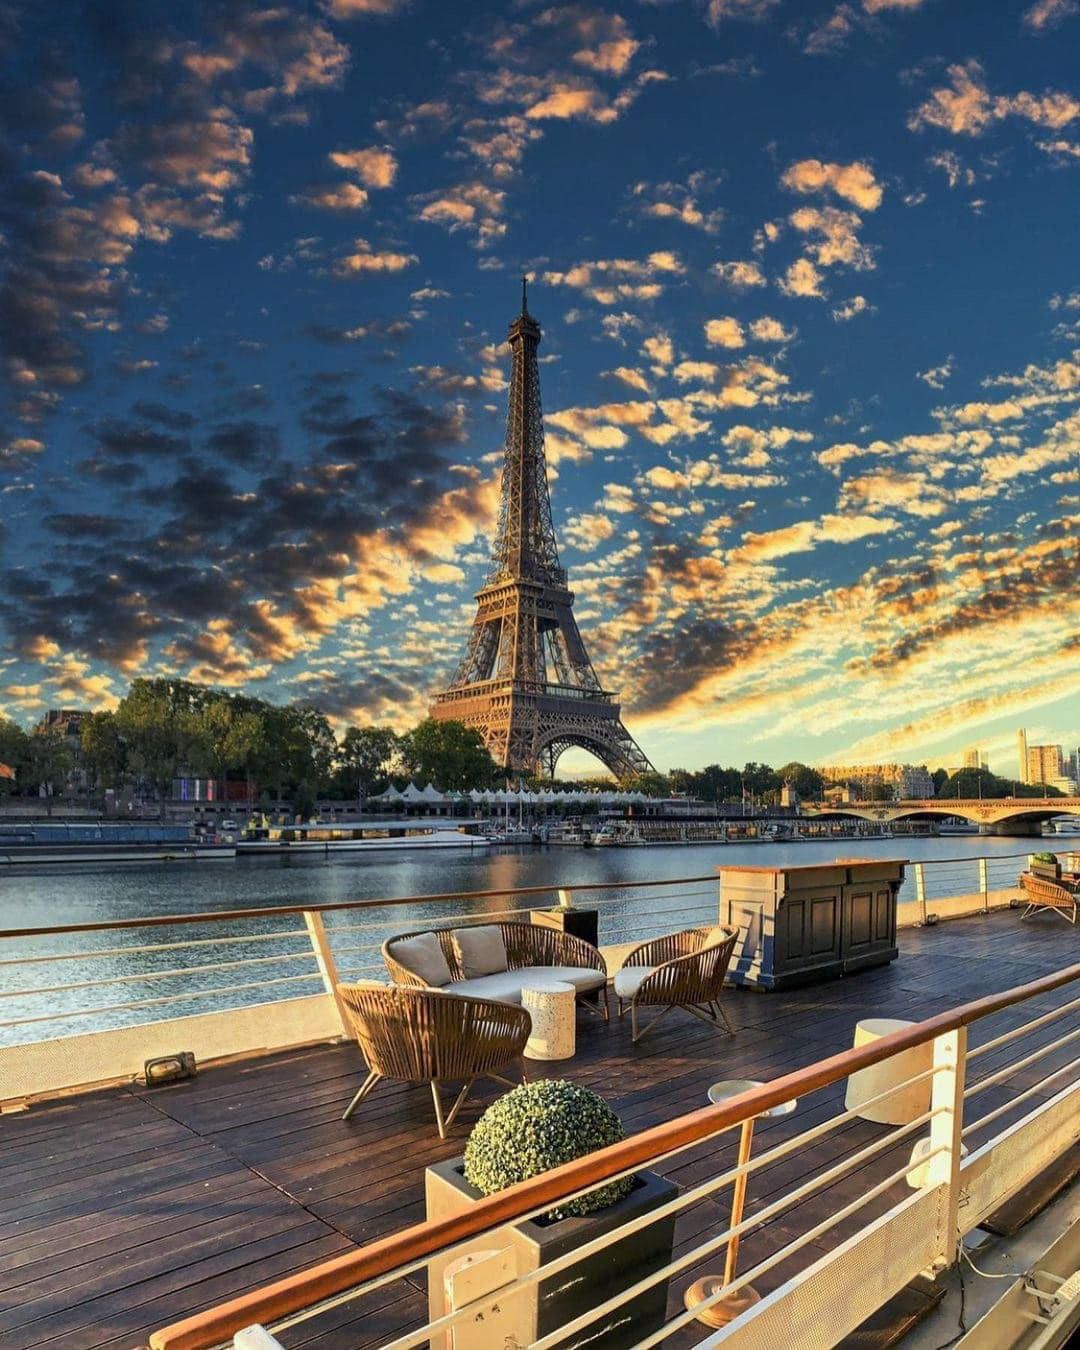 Eiffel Tower Paris, France